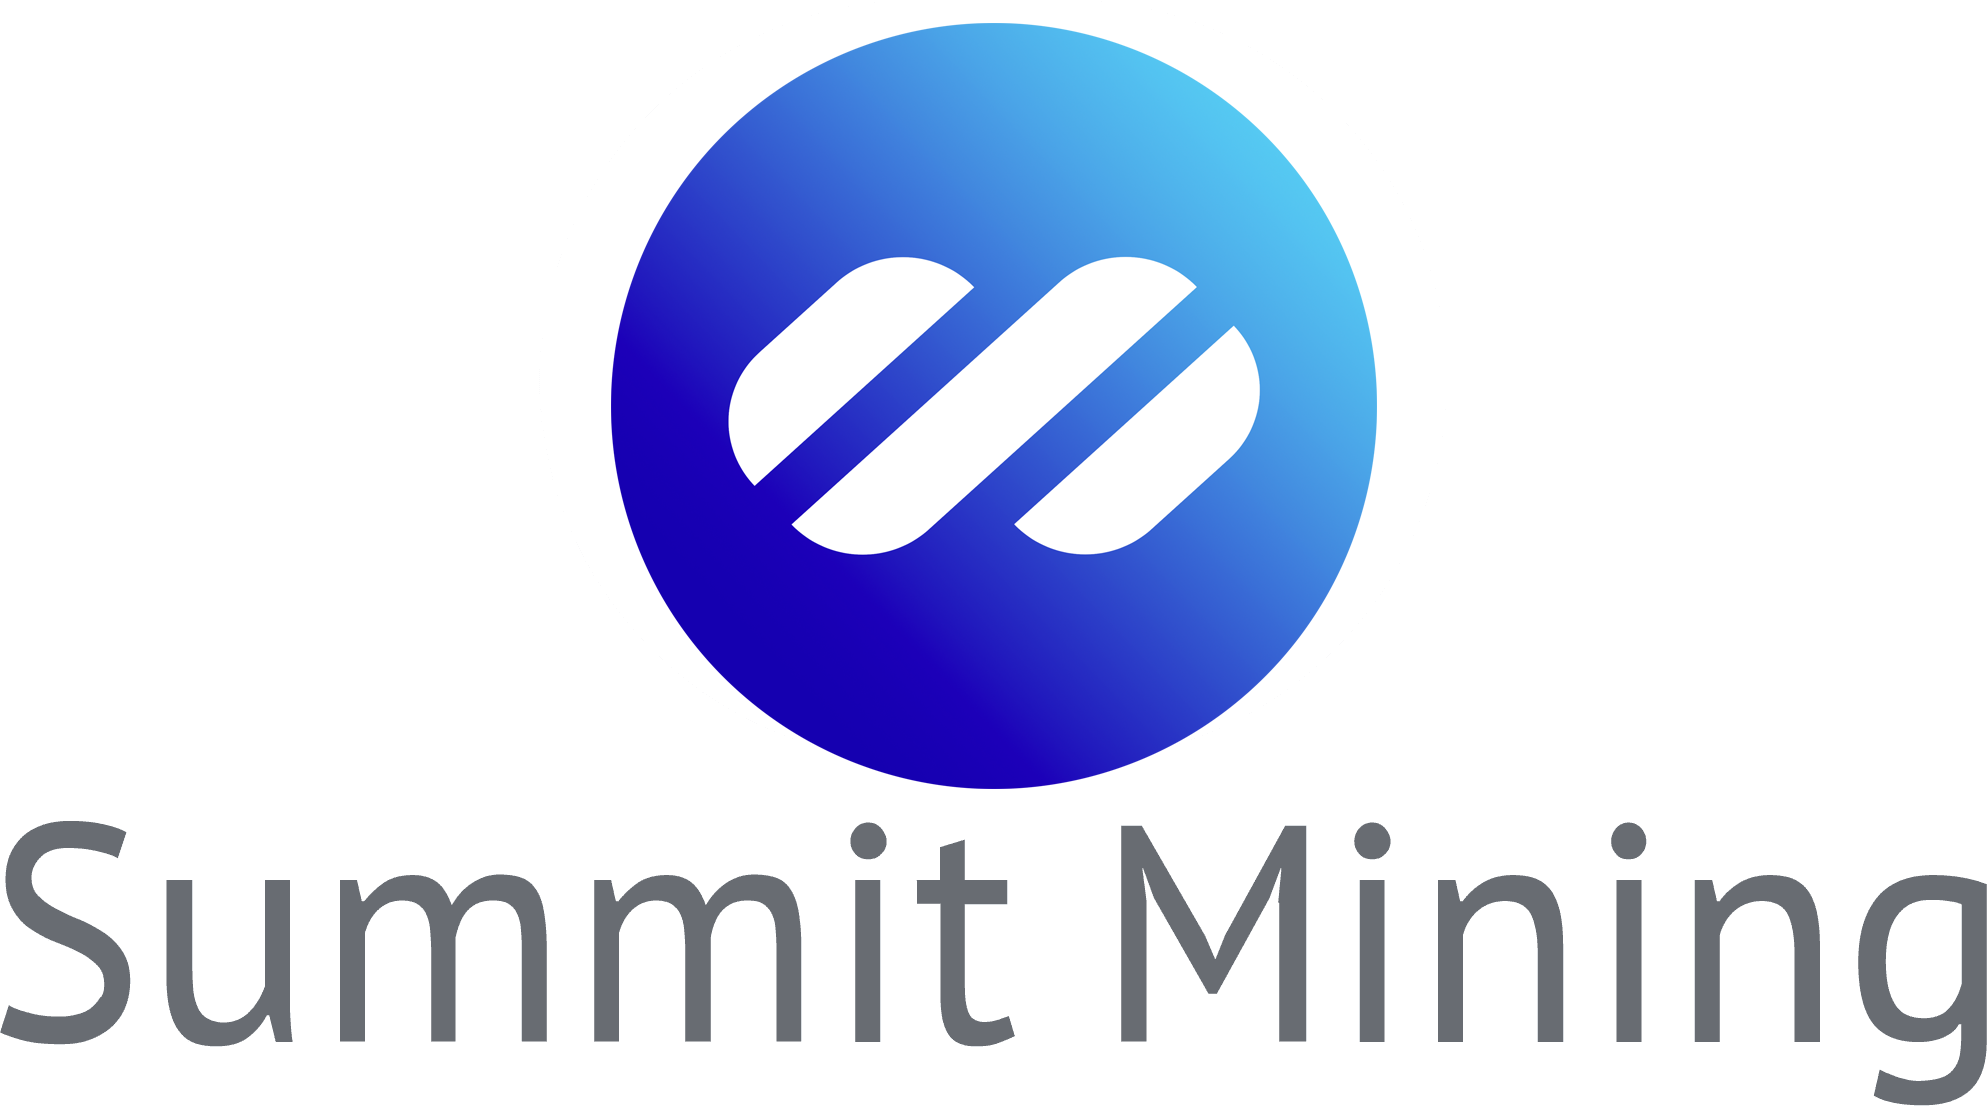 summit mining logo